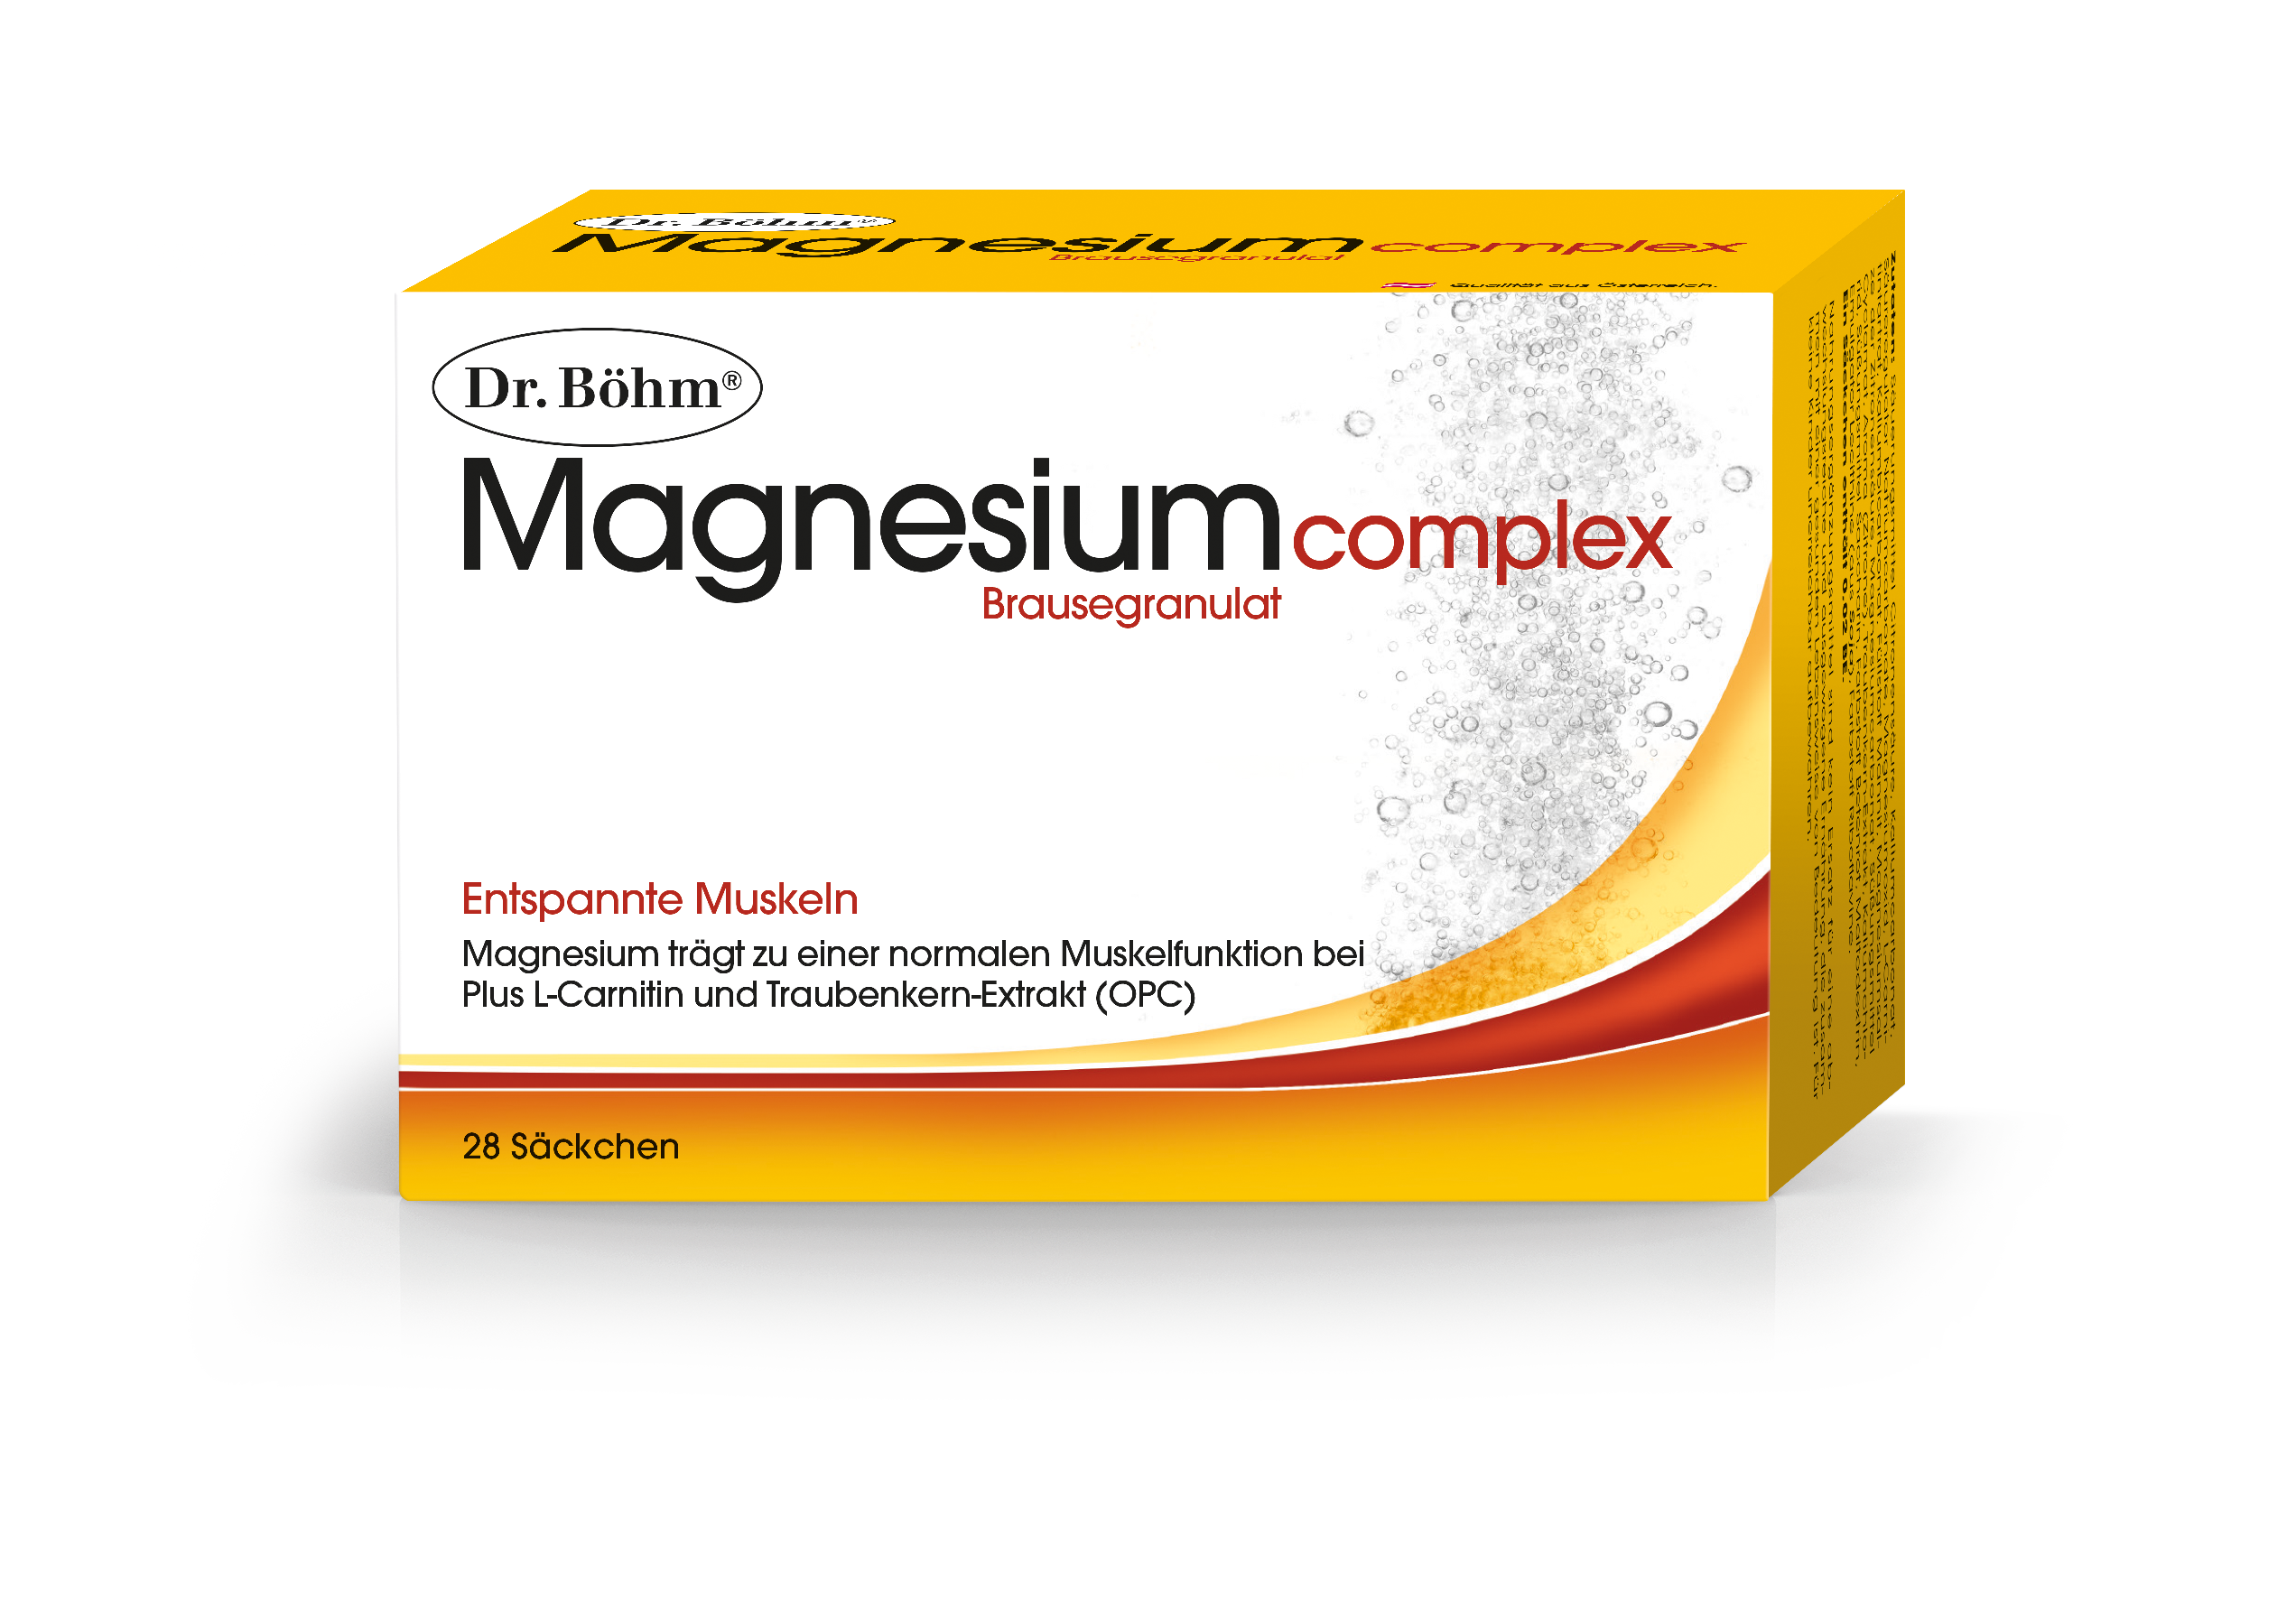 Dr. Böhm Magnesium complex Brausegranulat